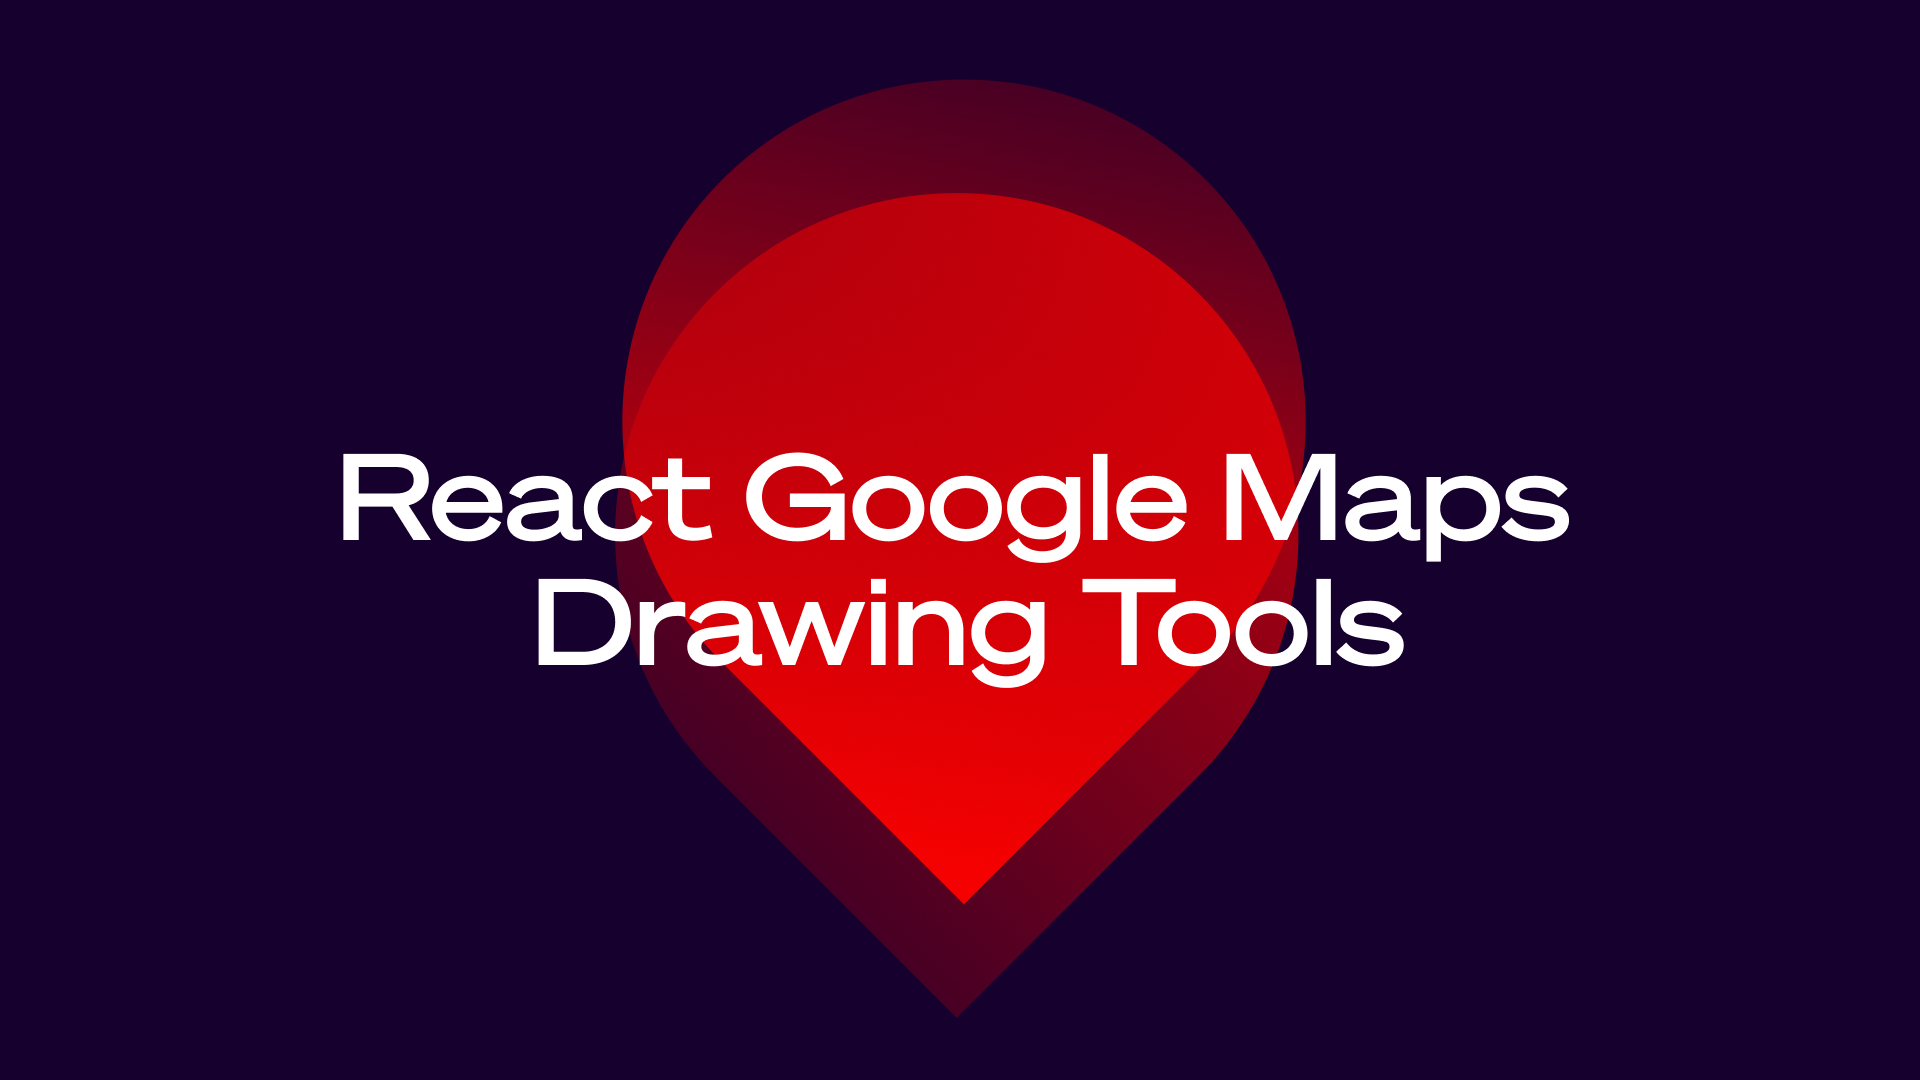 React Google Maps: Drawing Tools